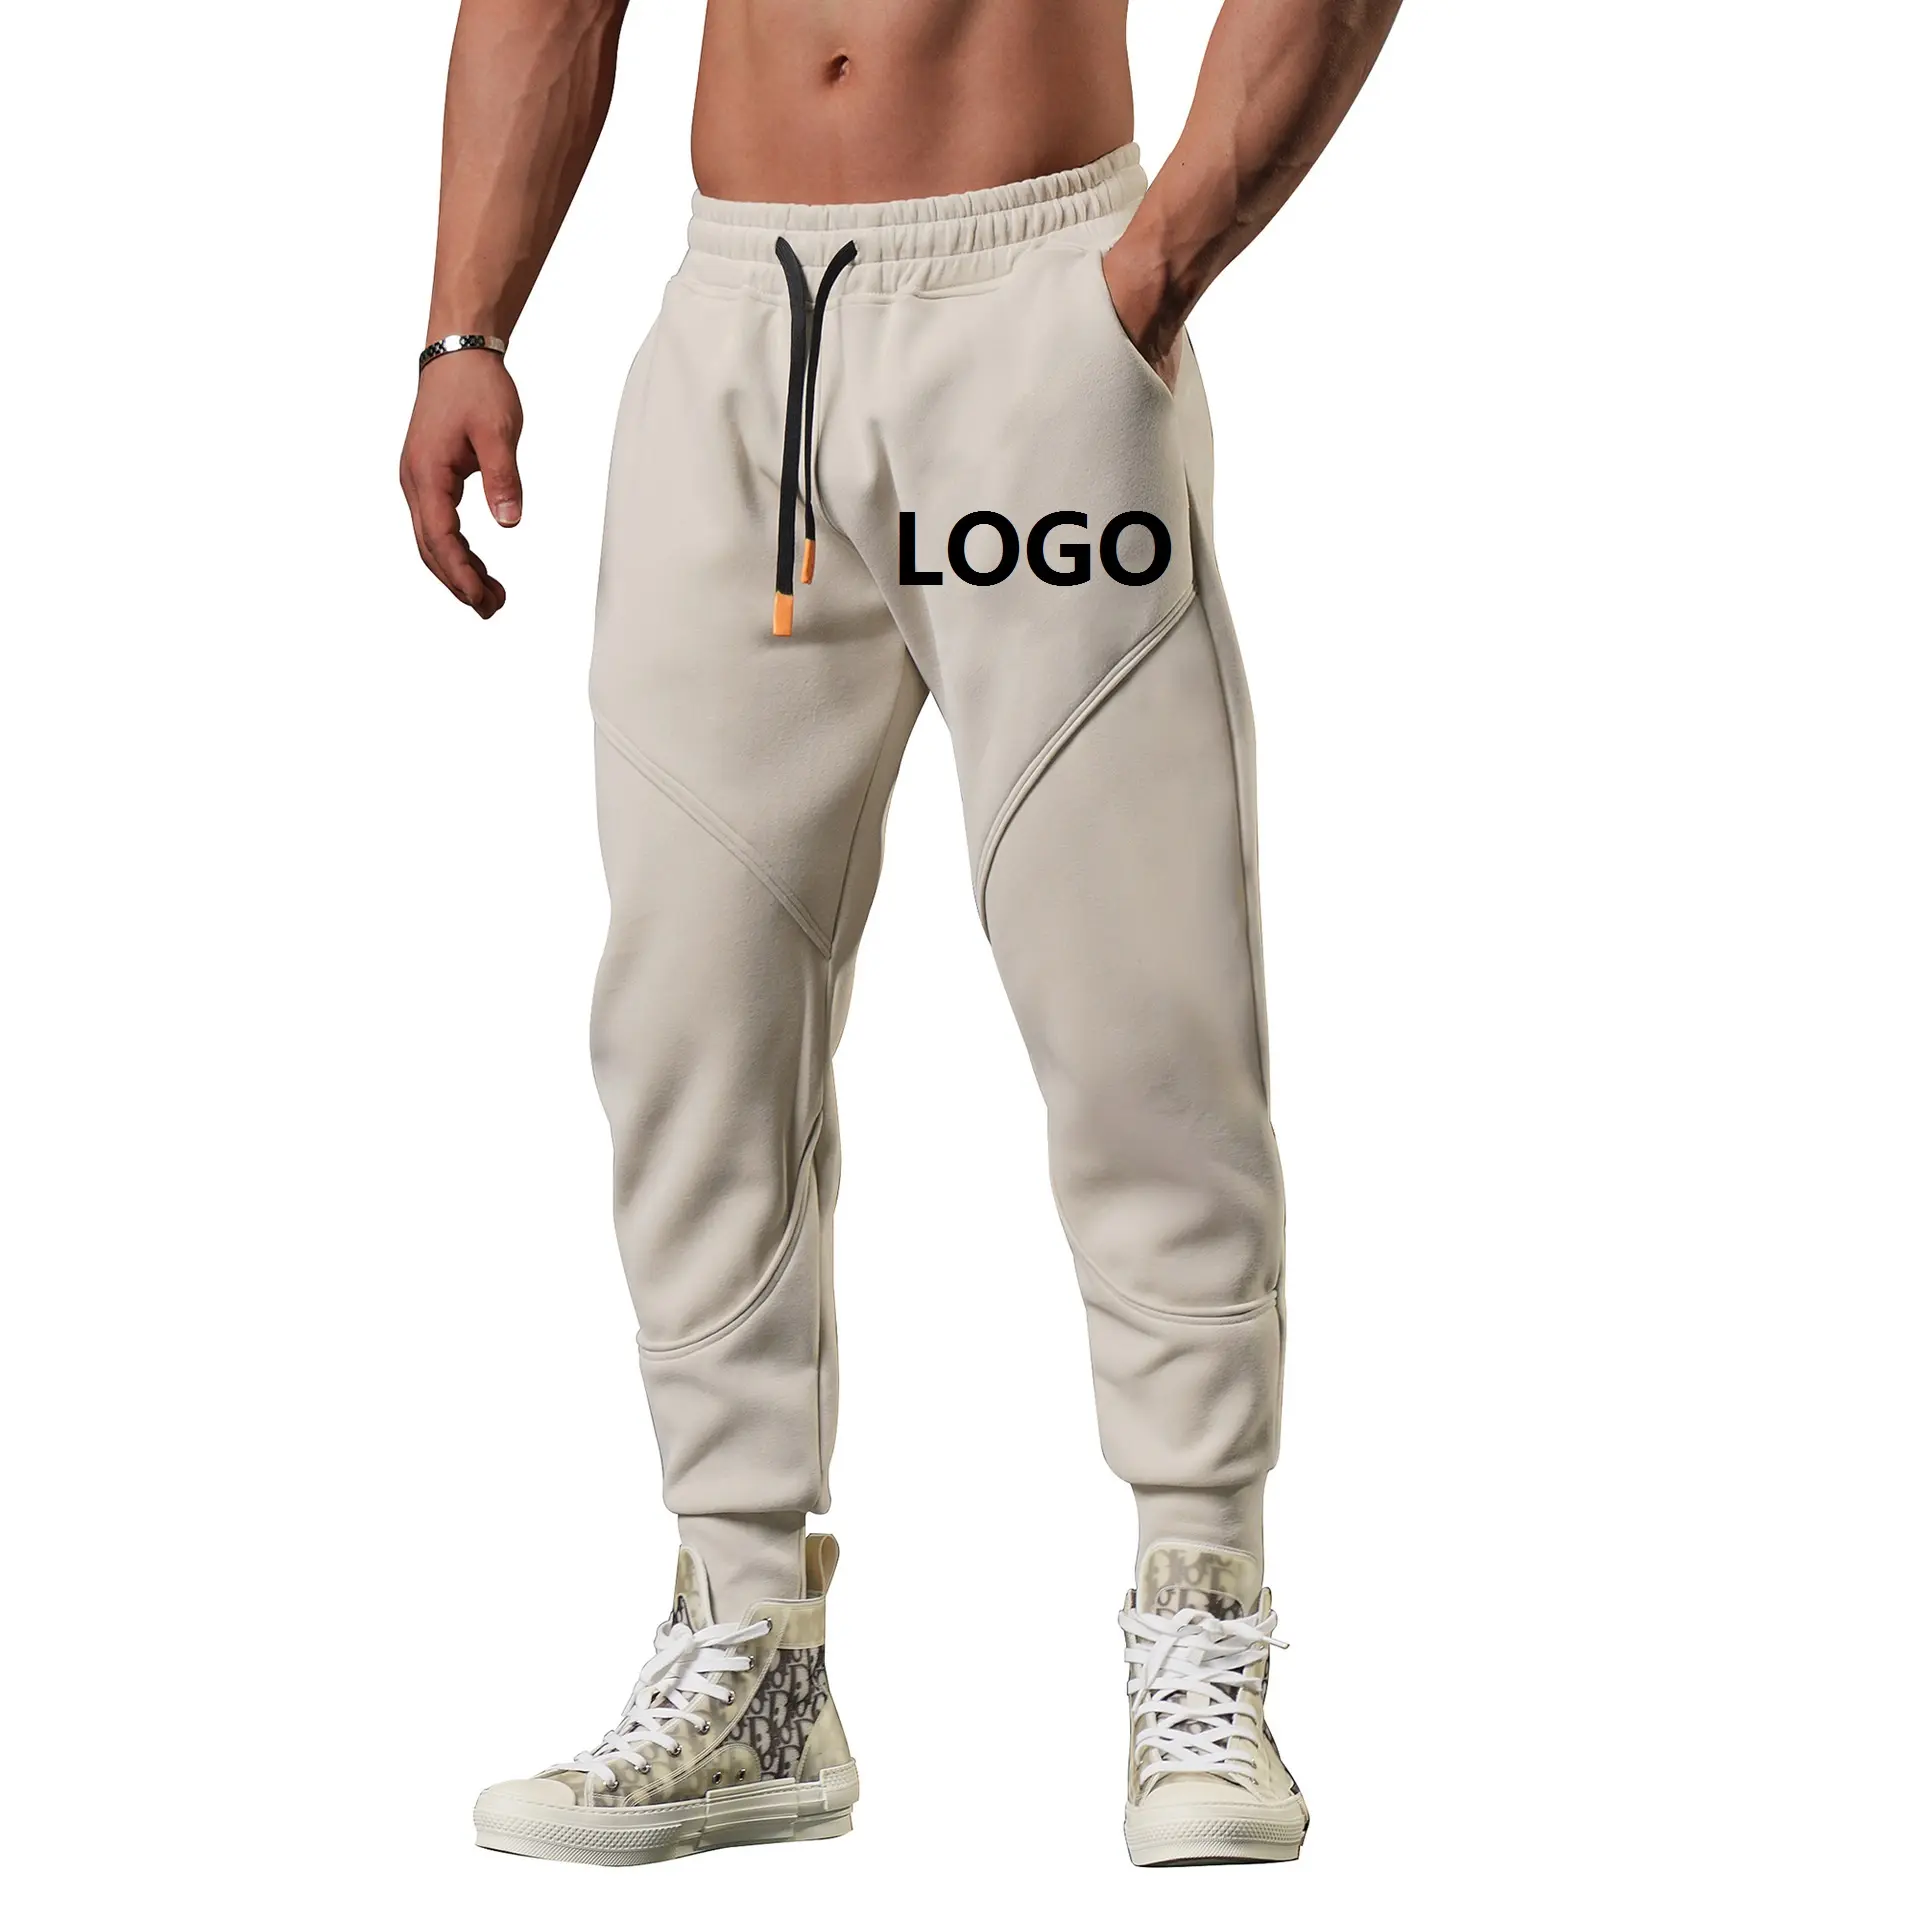 Мужская уличная одежда с логотипом на заказ